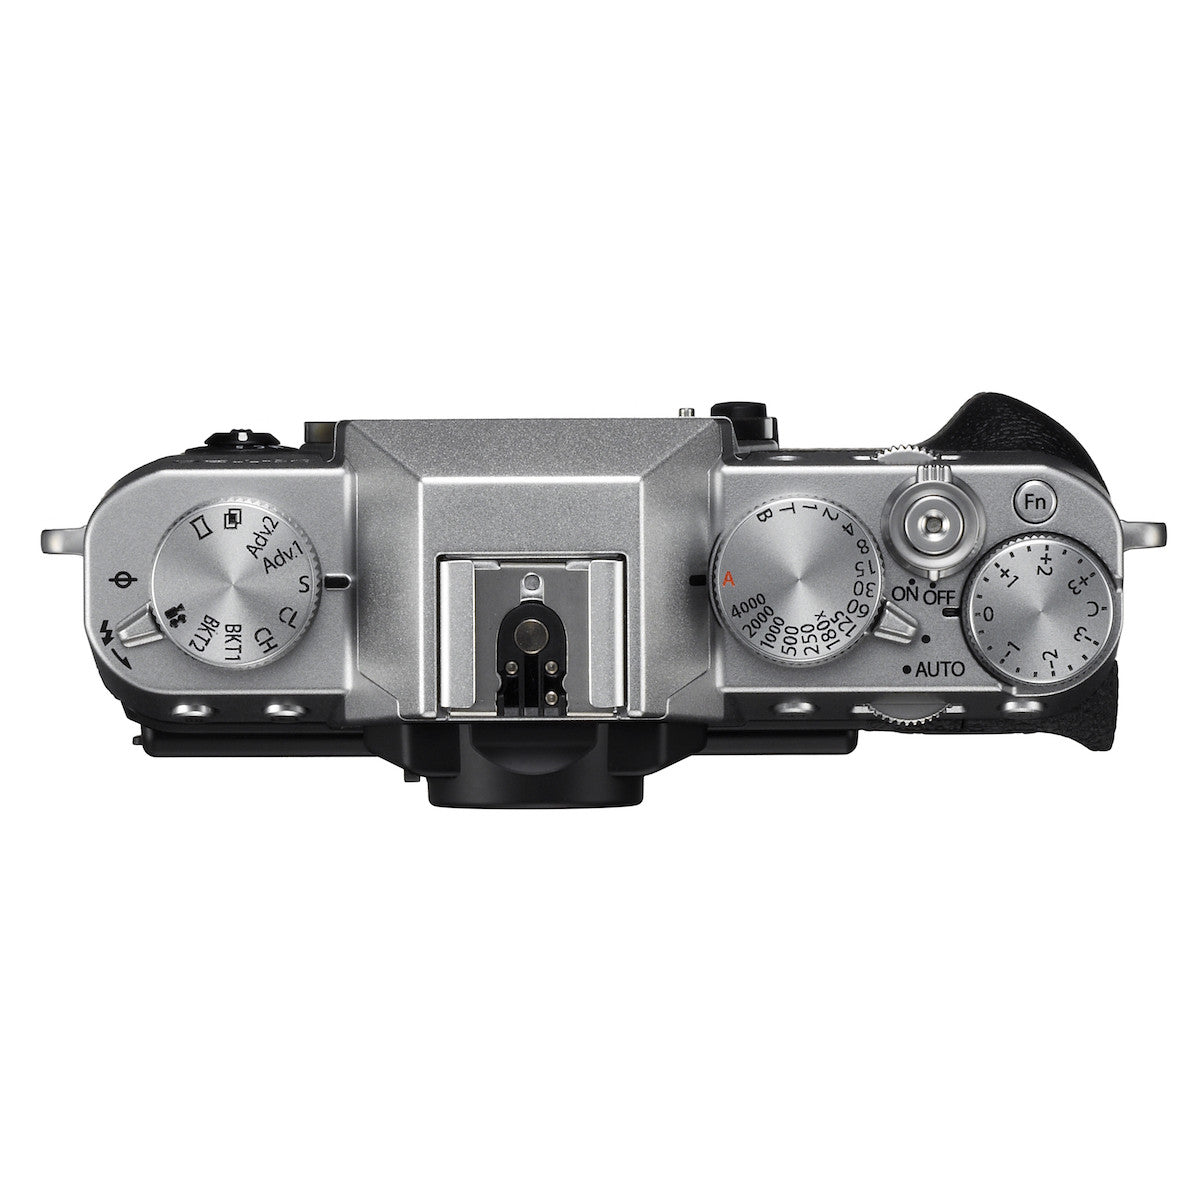 Fujifilm X-T20 Body with XC 16-50mm Lens Kit (Silver)